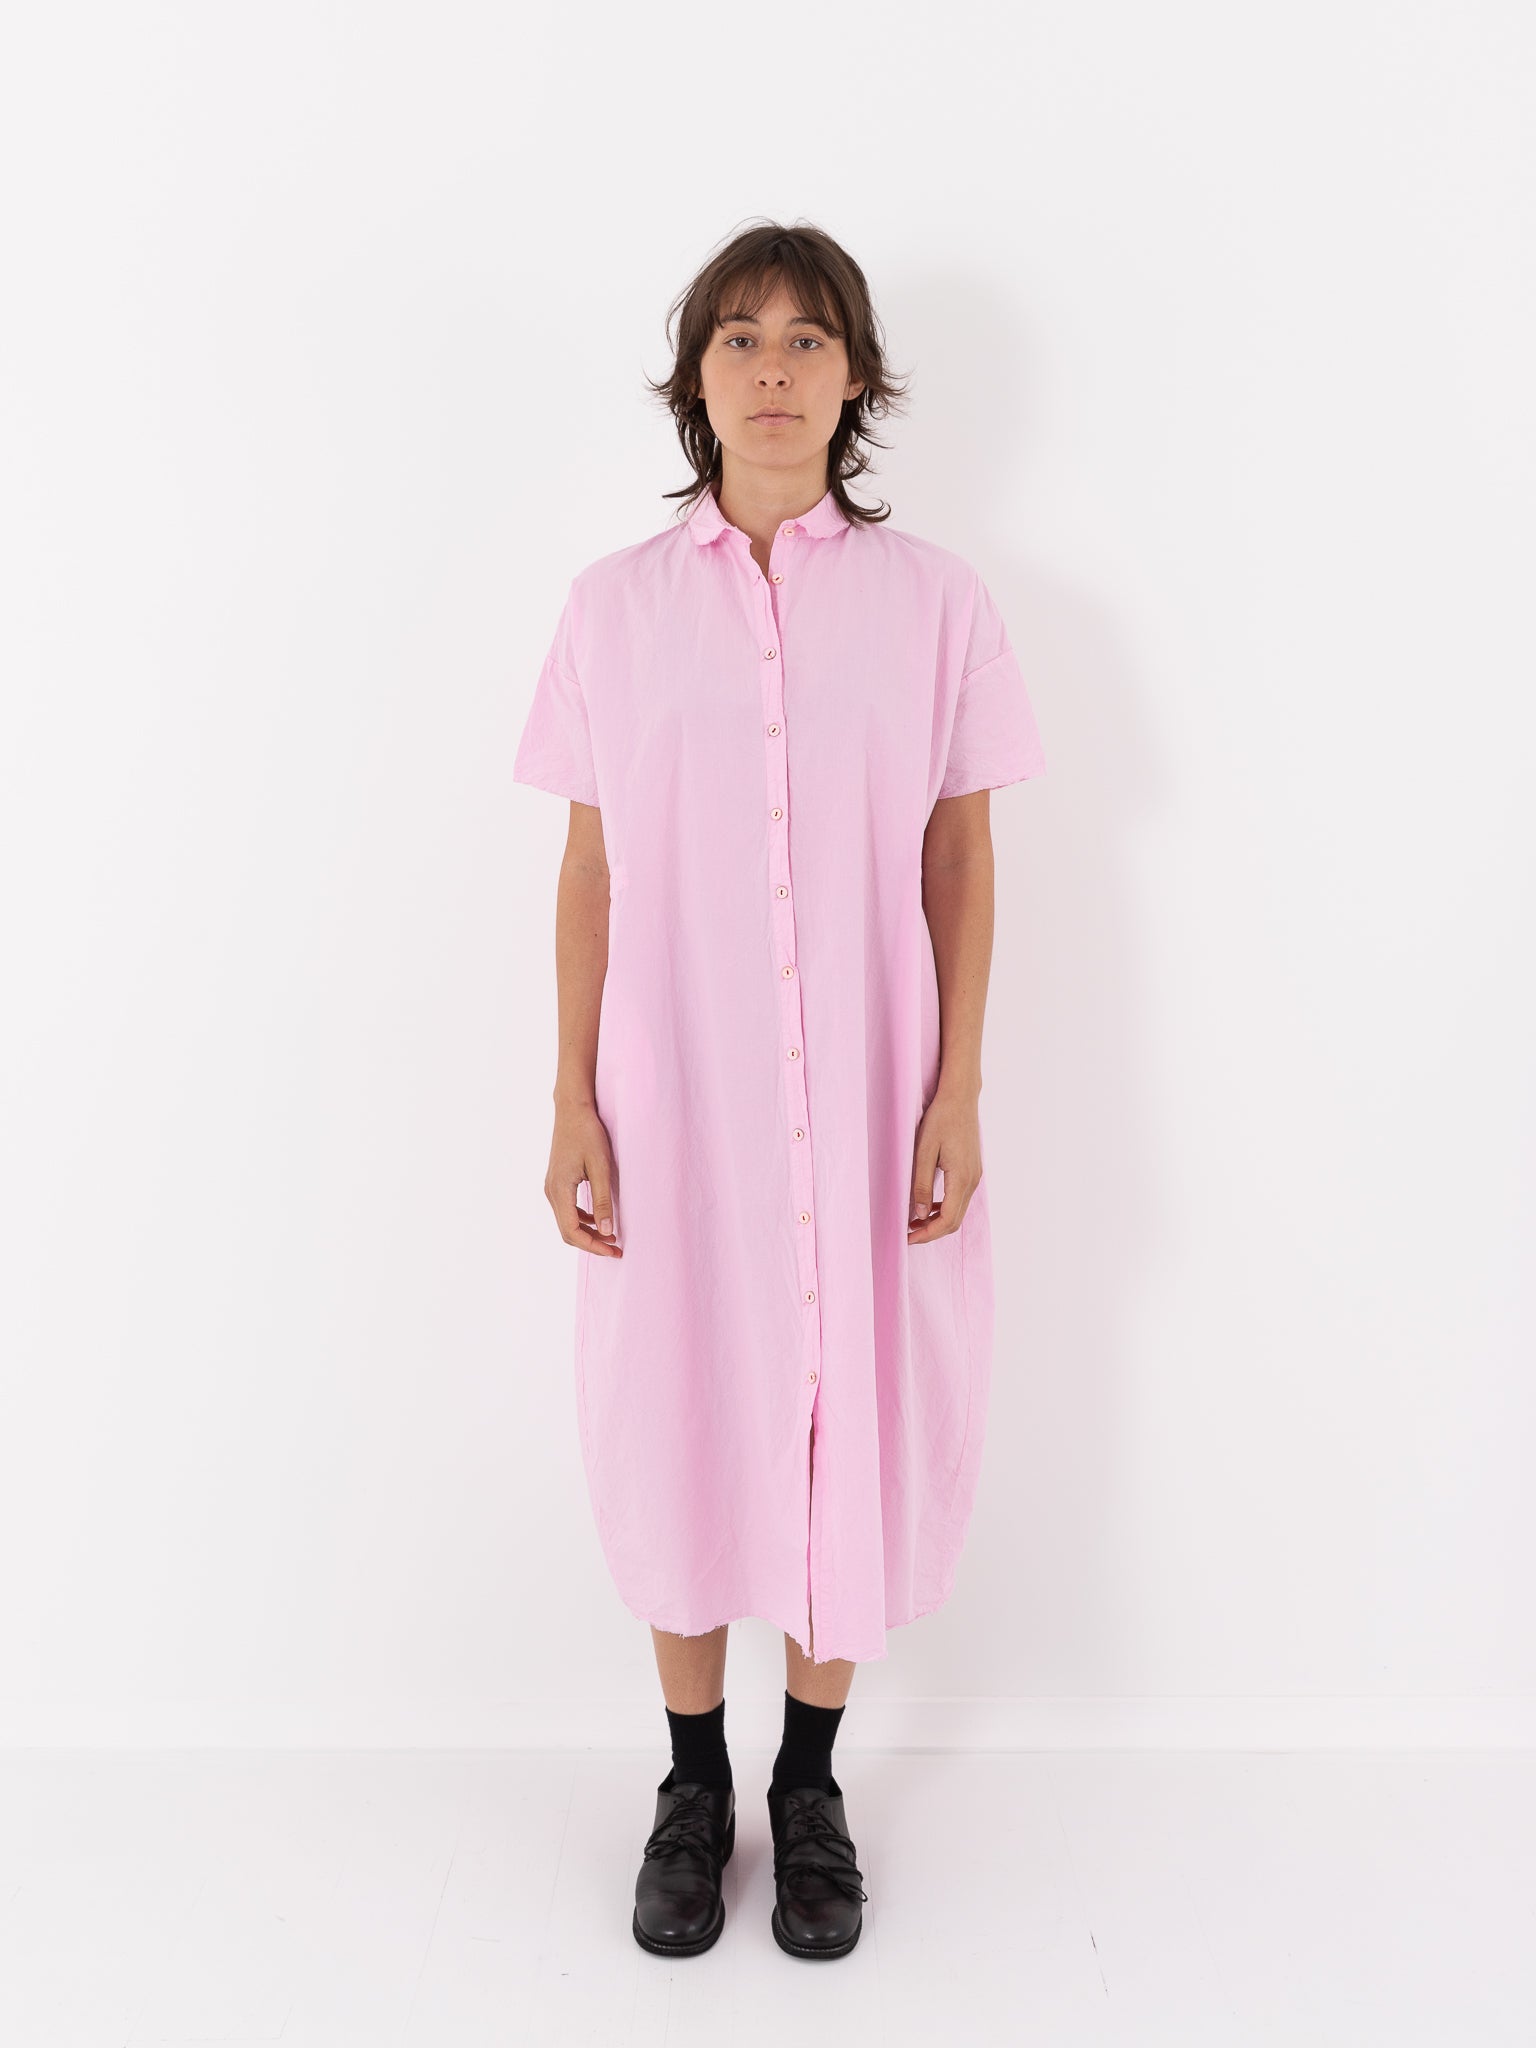 Hannoh Wessel Reana Dress, Pink - Worthwhile, Inc.